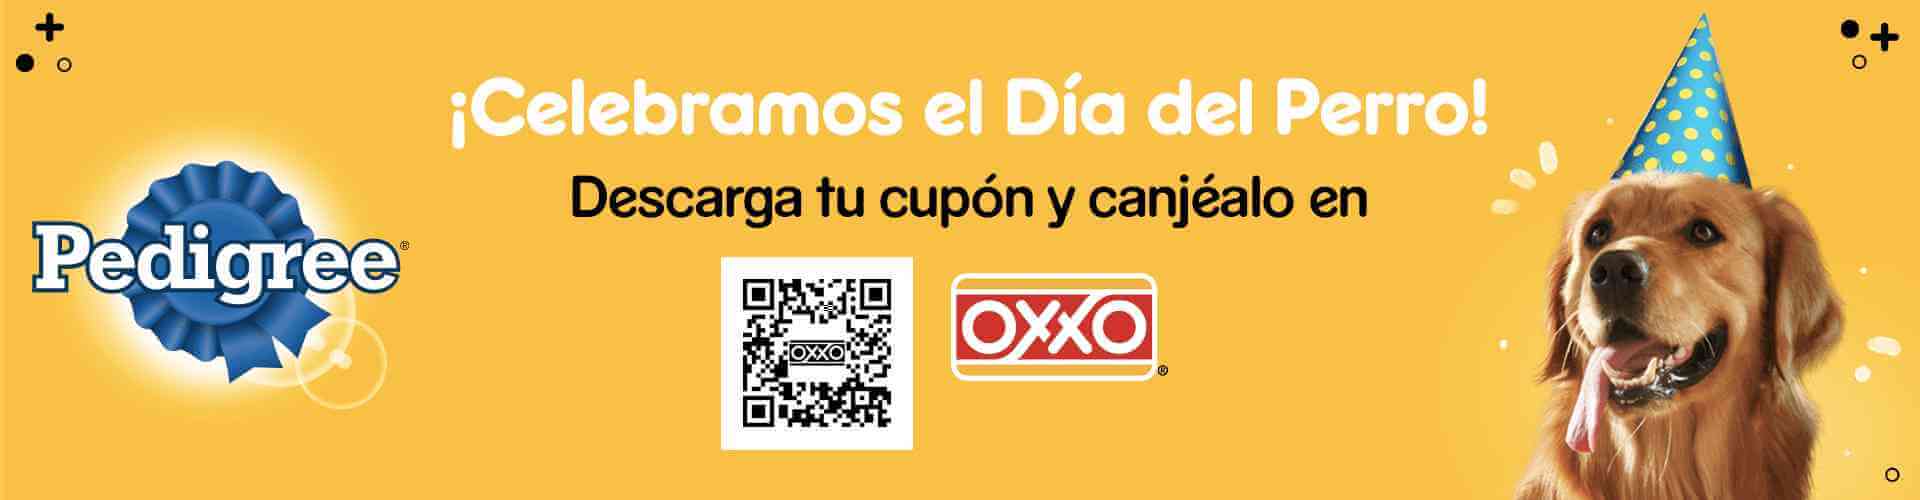 Oferta Oxxo: 3x2 en productos Pedigree seleccionados